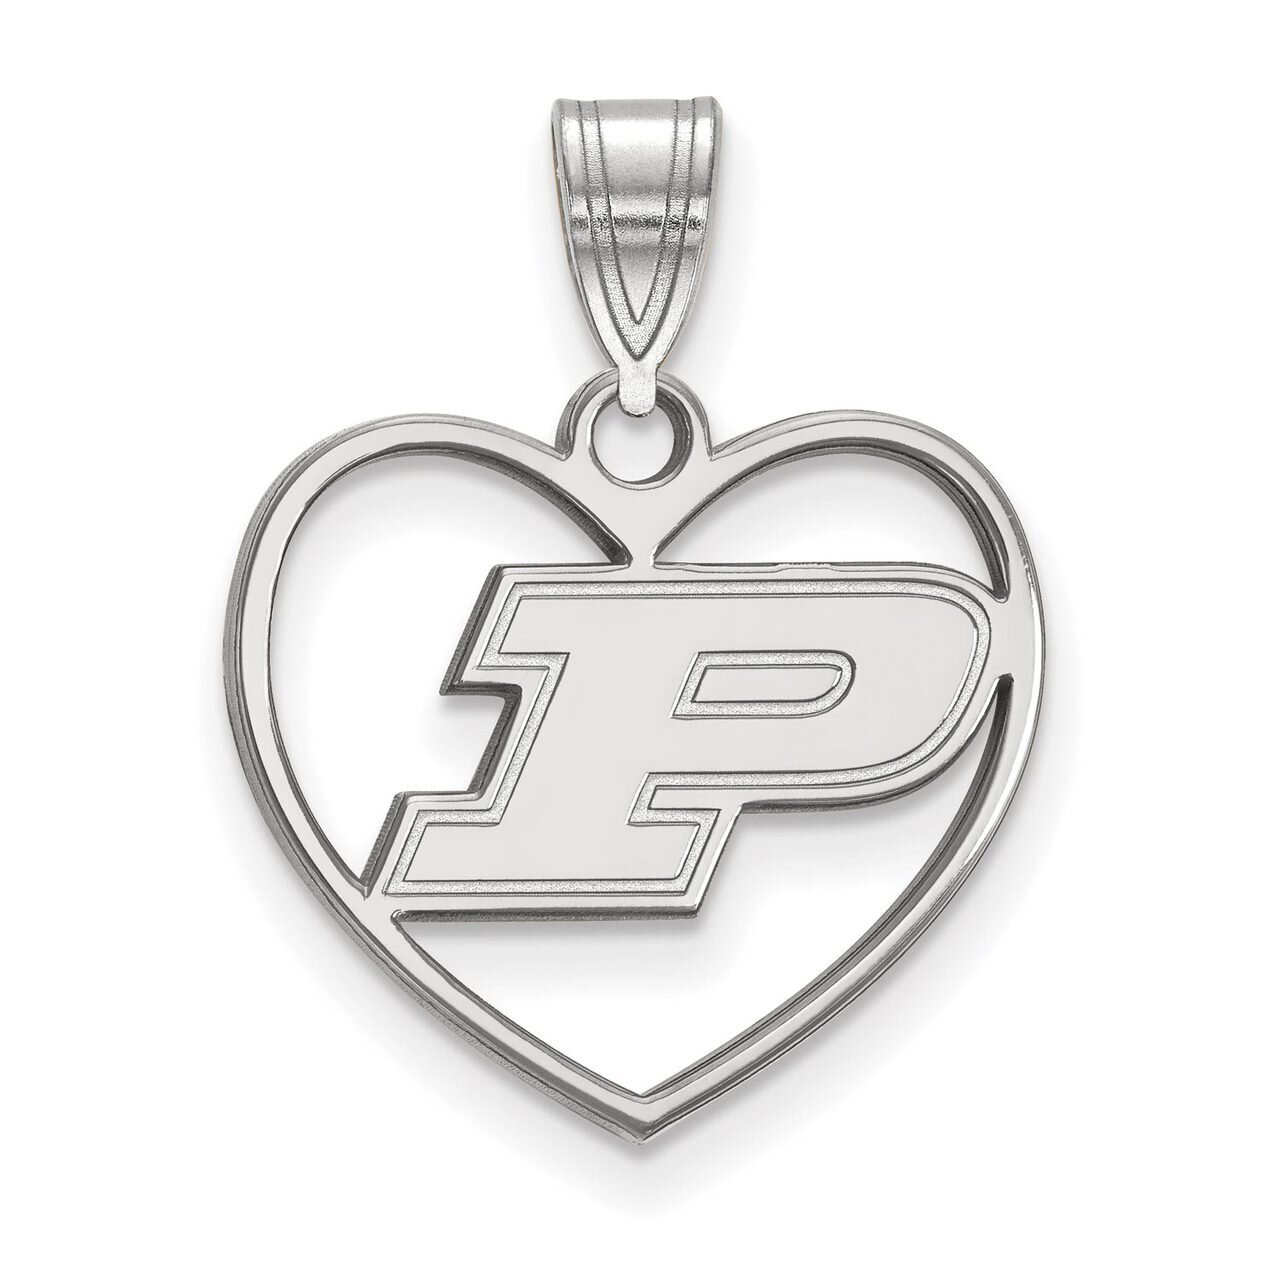 Purdue Pendant in Heart Sterling Silver SS017PU